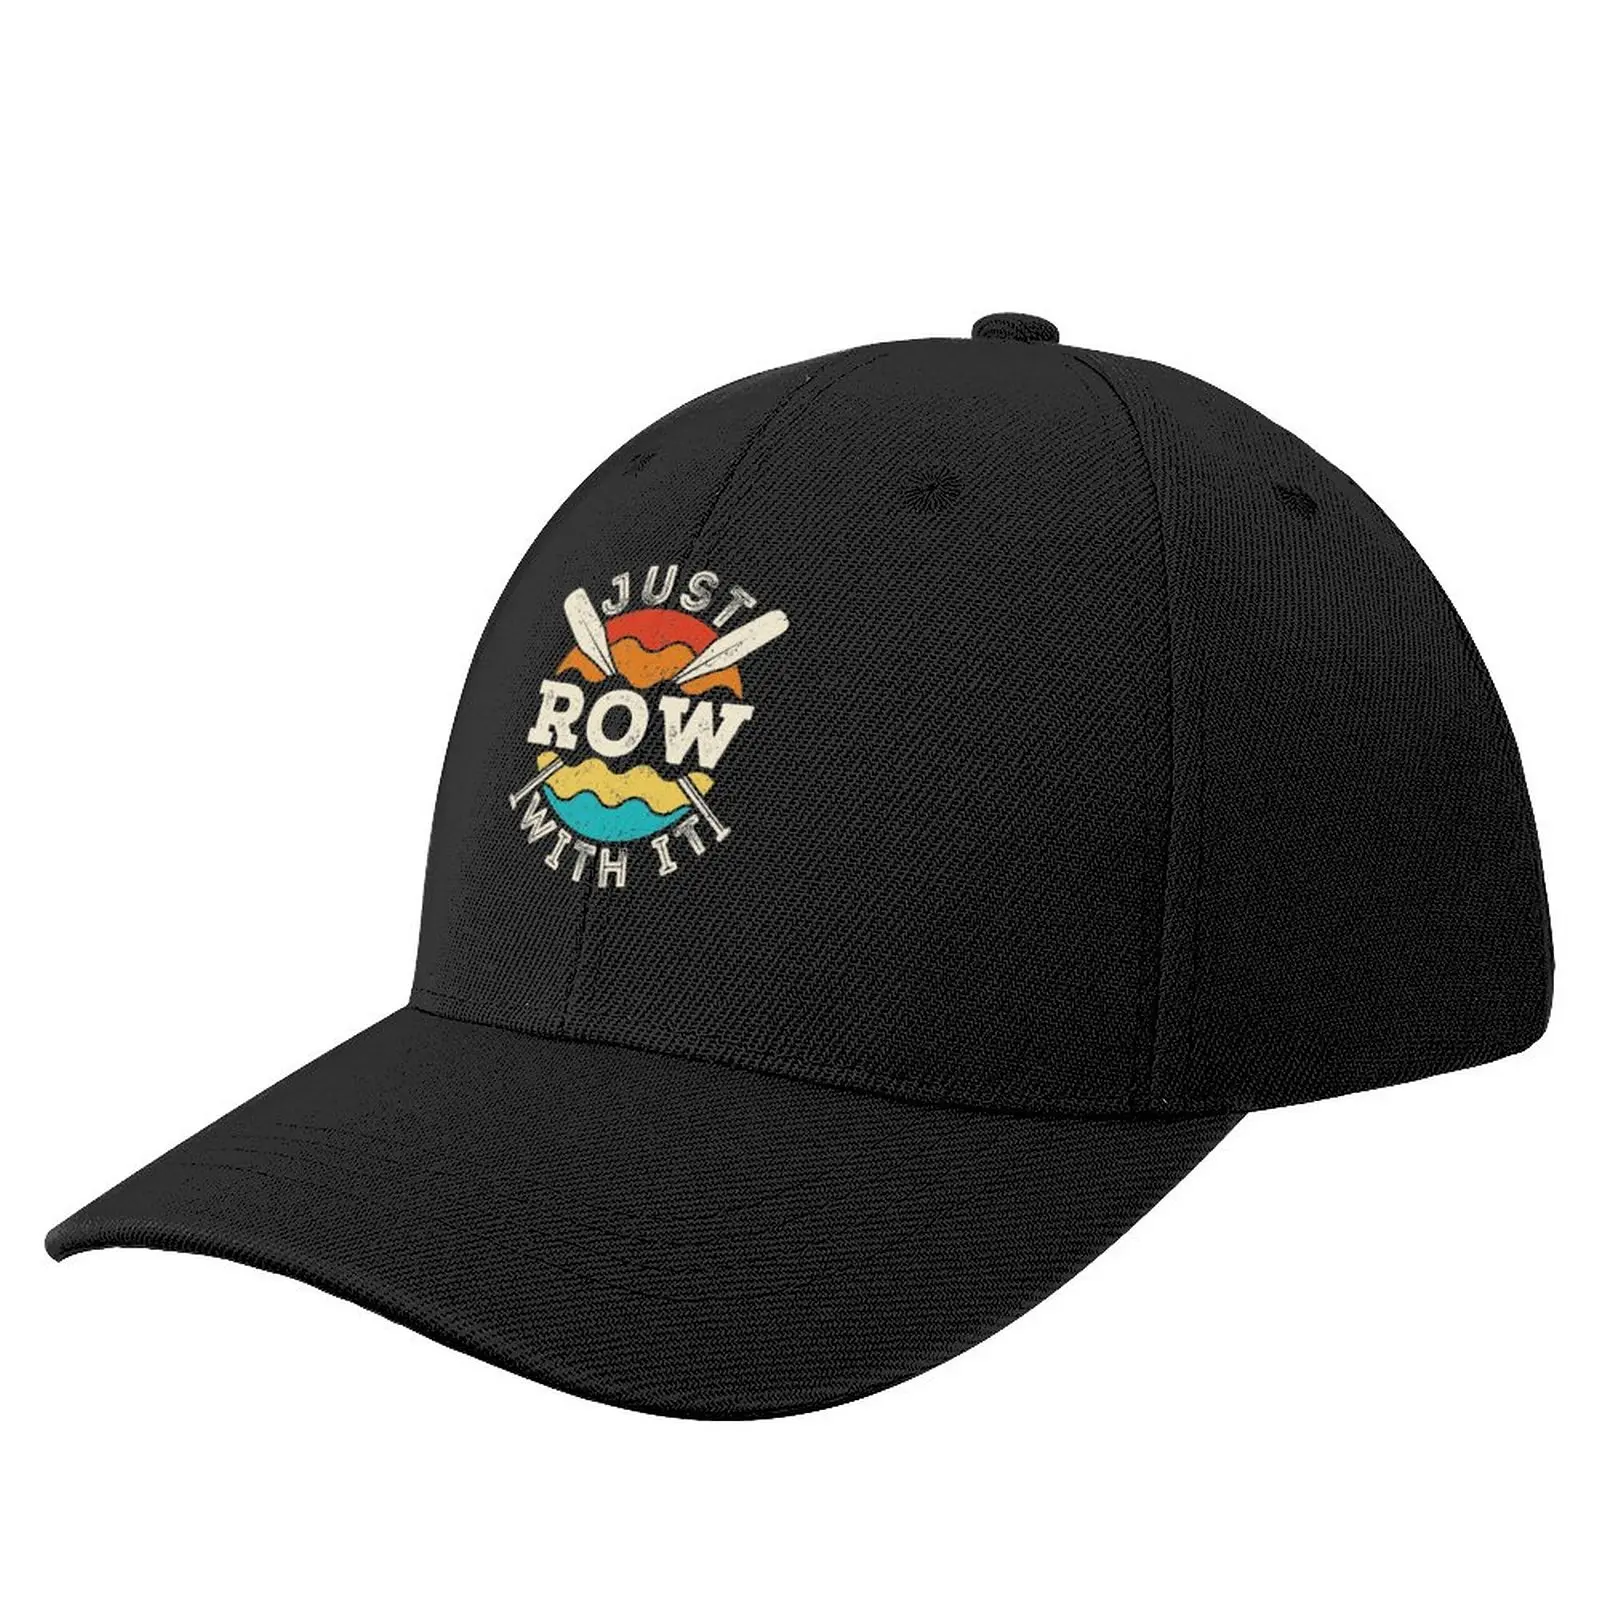 

Just Row with It Rowing Rower Crew Team Oars Baseball Cap Trucker Cap Sunhat hiking hat Male custom hats Hats For Women Men's